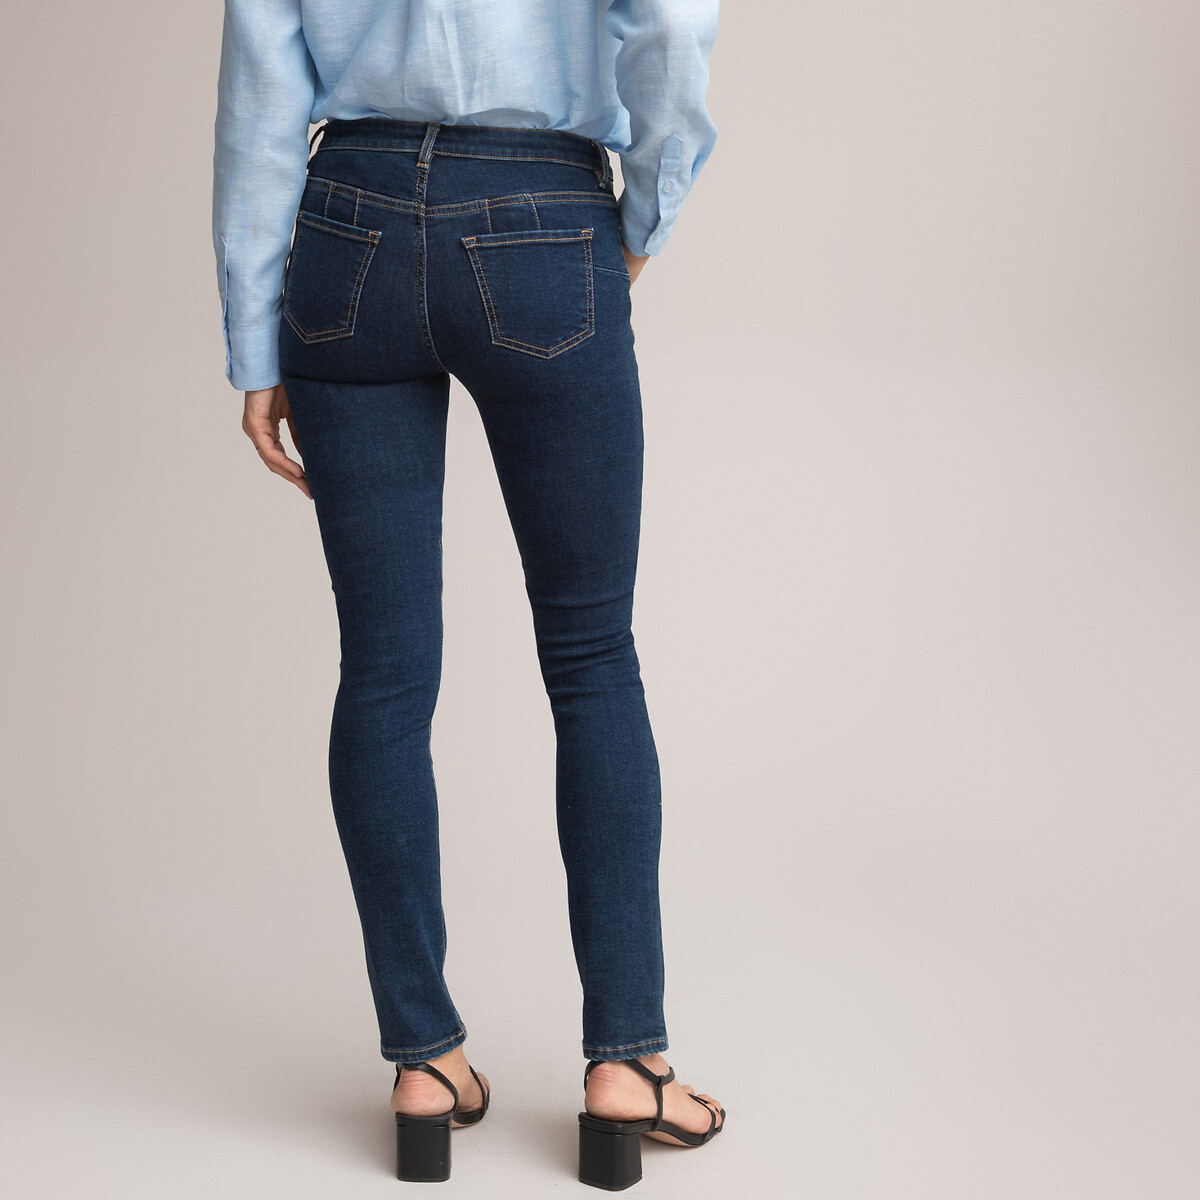 Slim push-up jeans for maximum comfort, mid rise length 31.5